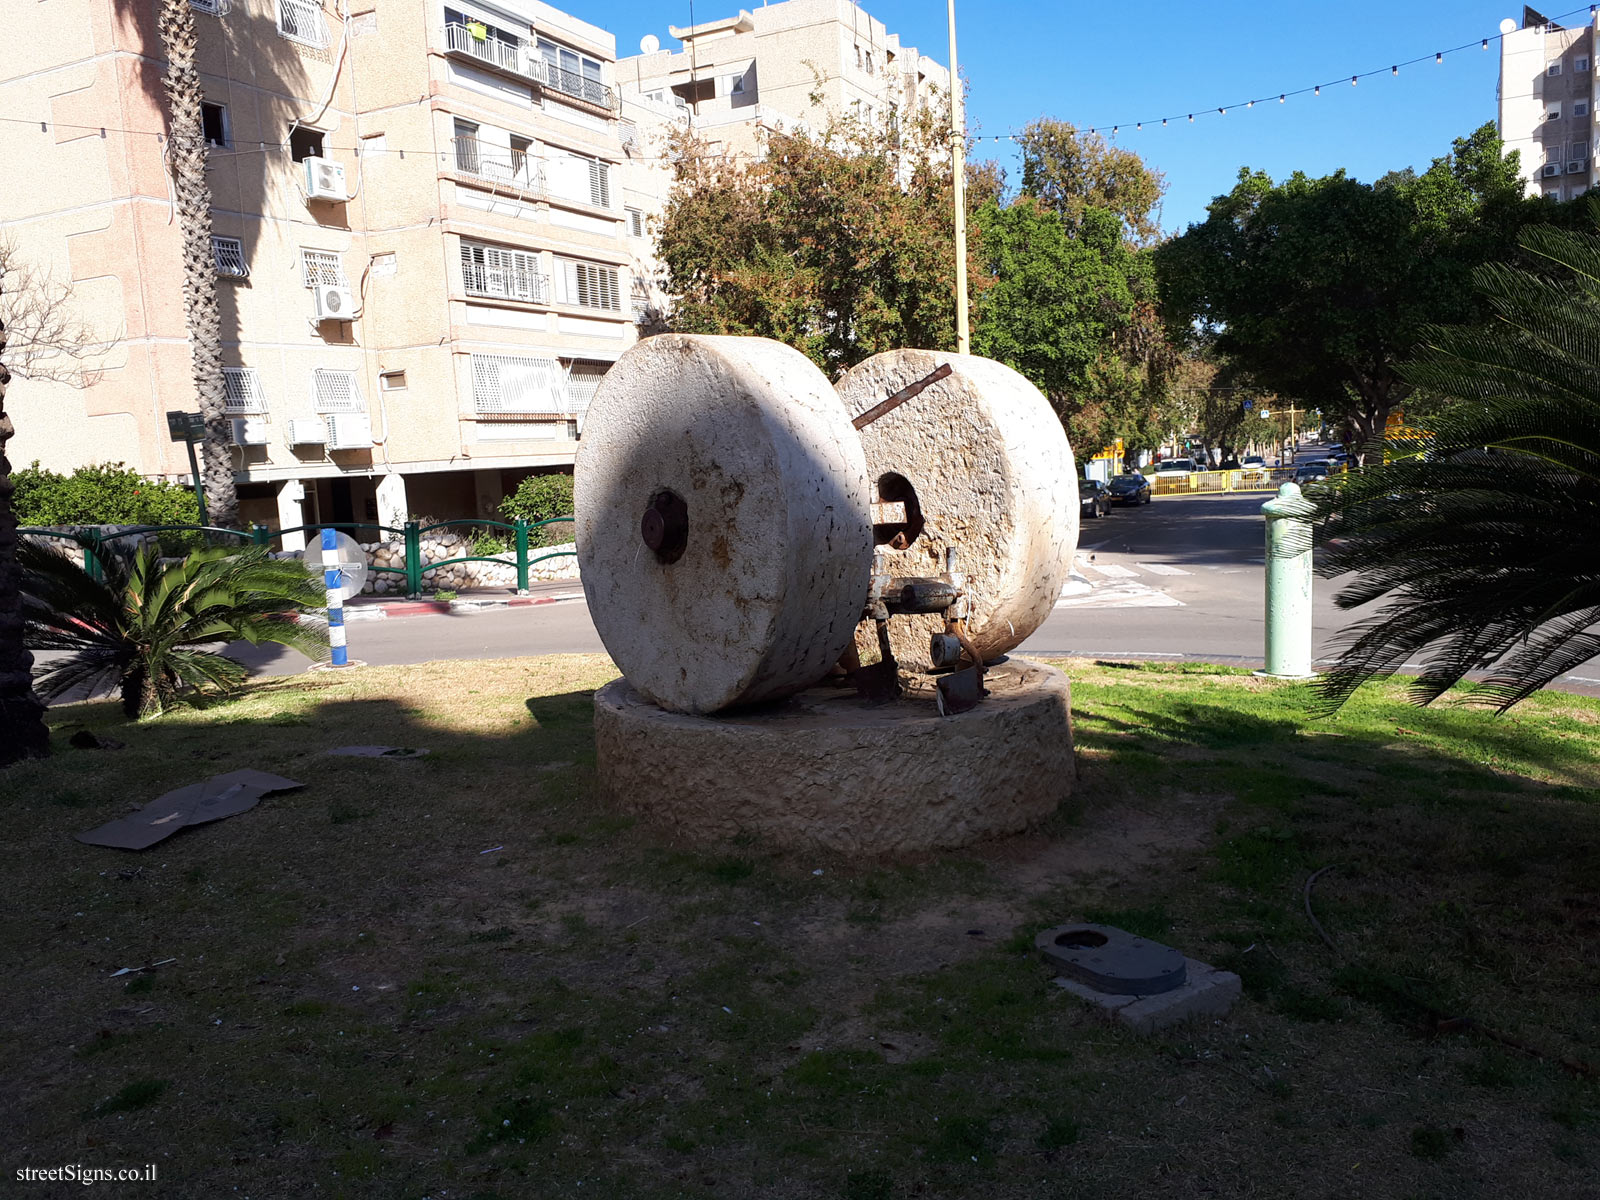 Ganei Tikva - "Millstones" - Outdoor sculpture - Ein Ganim St 2-4, Ganei Tikva, Israel